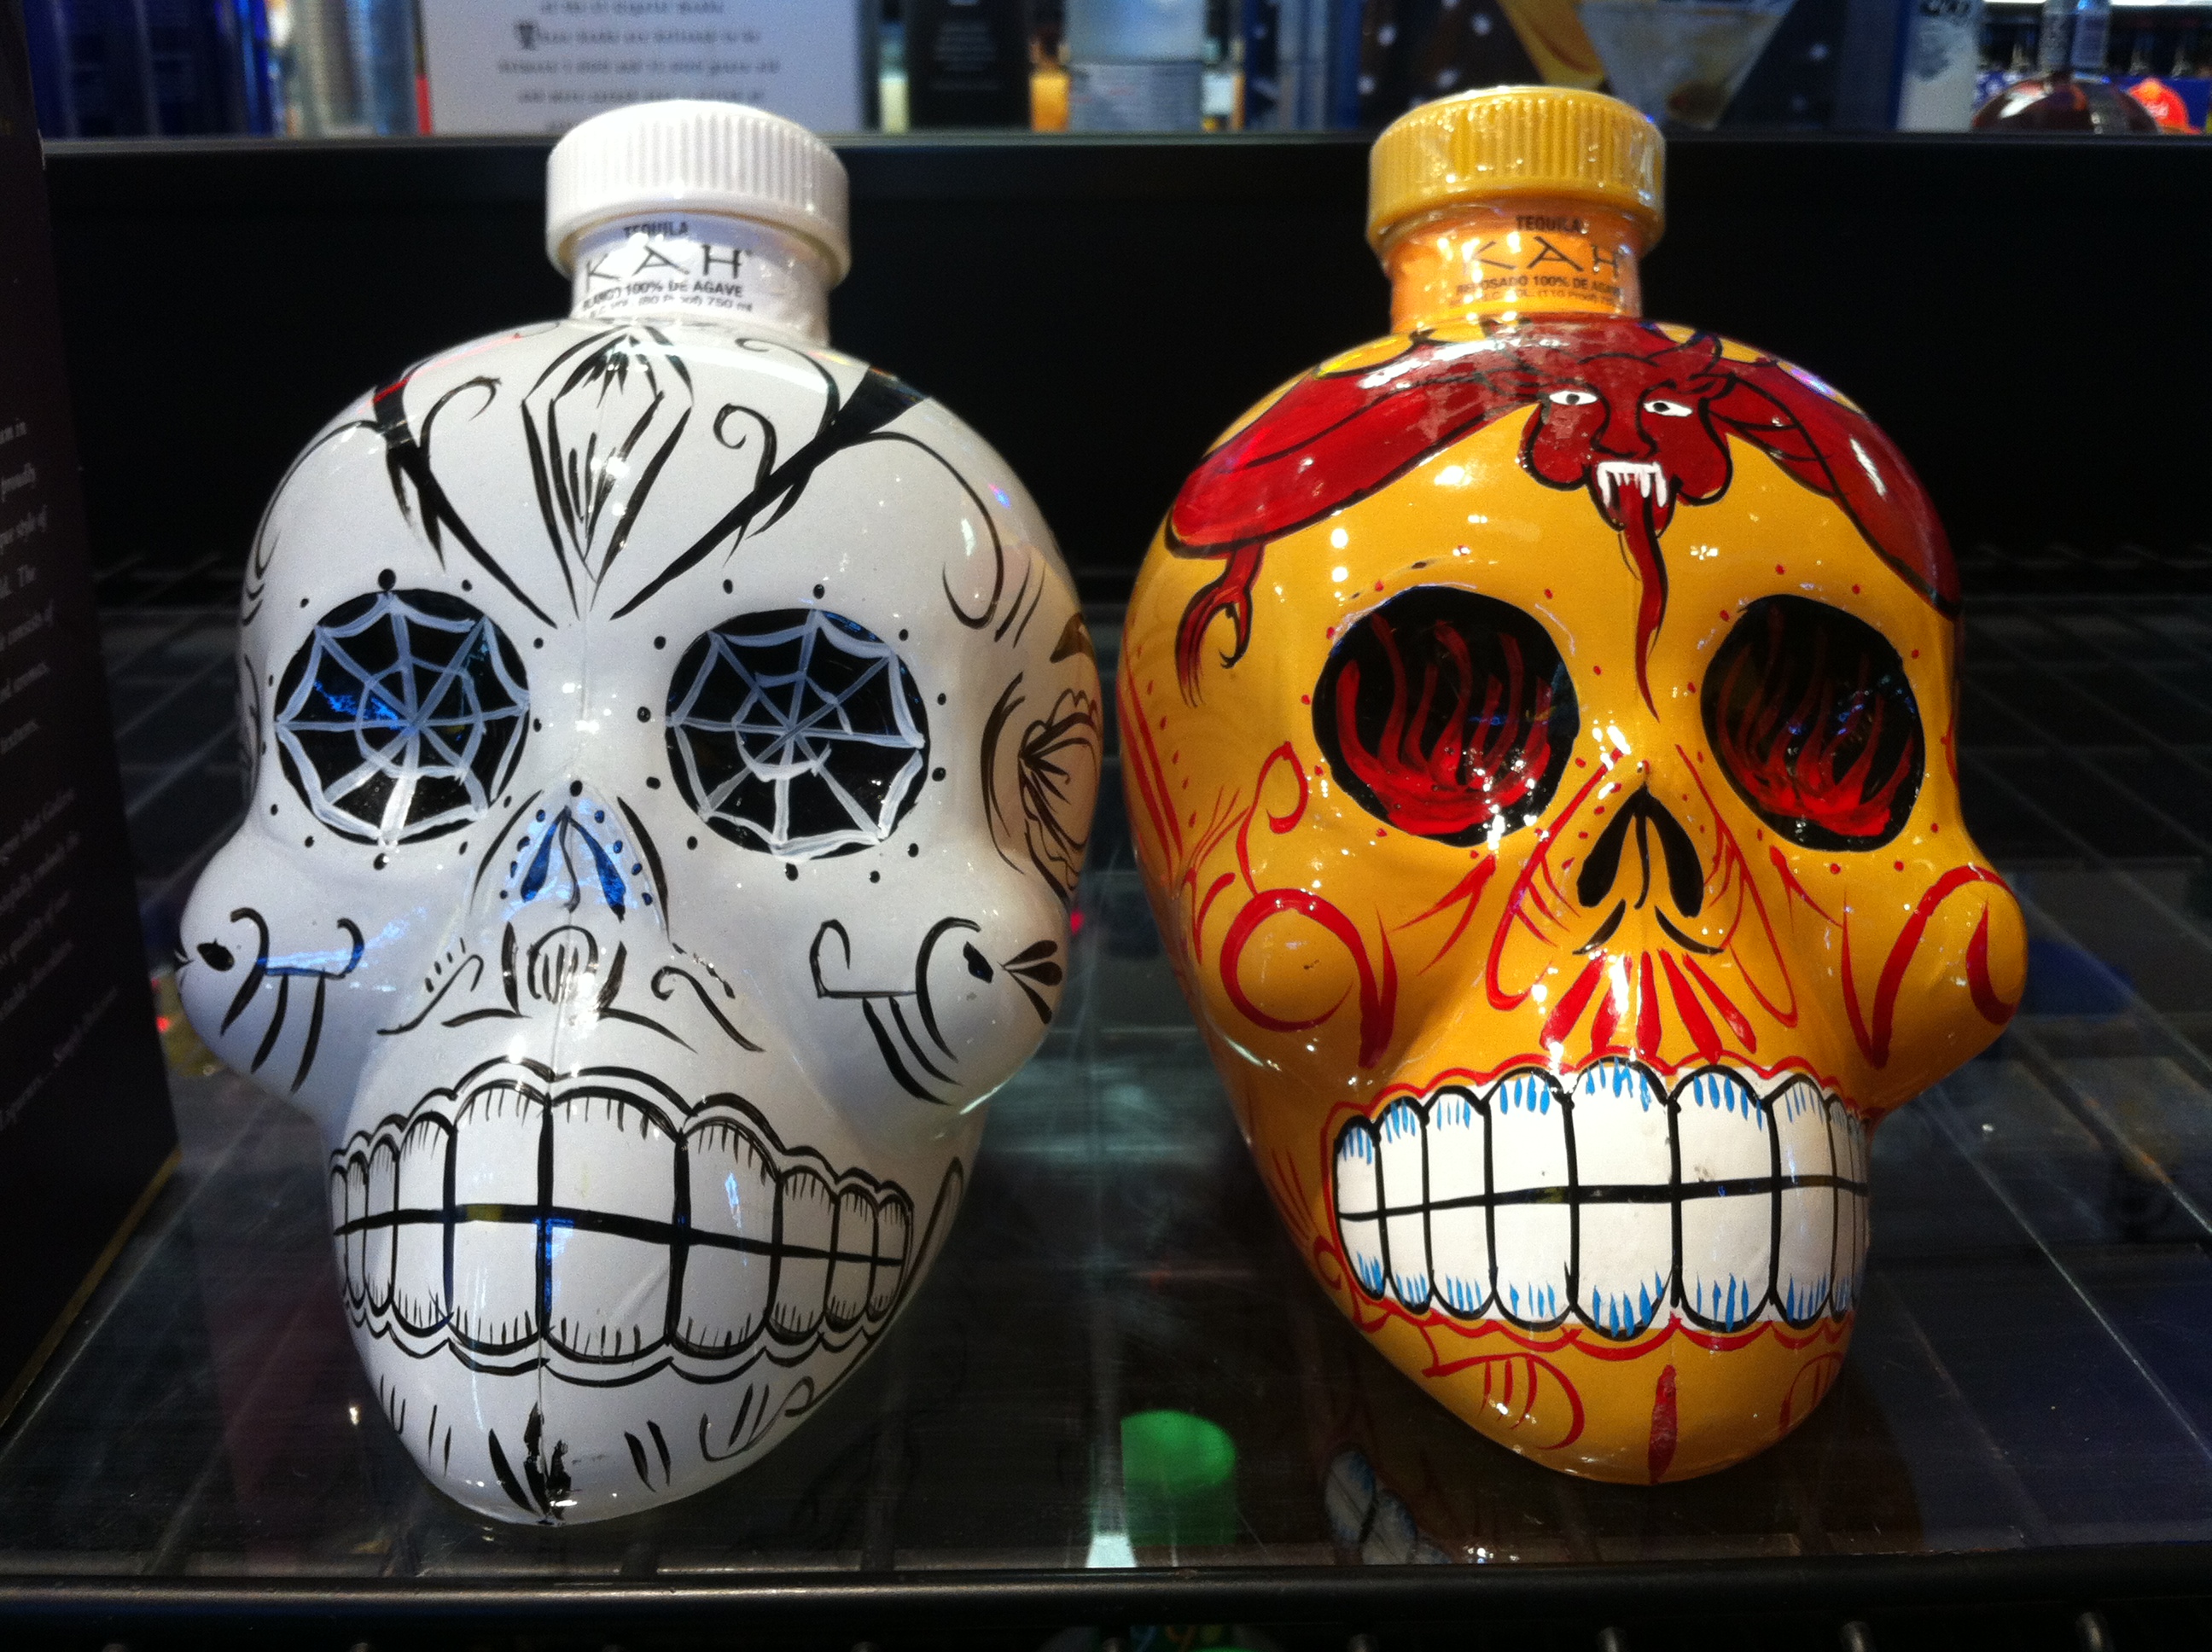 Some dope Tequila sugar skull bottles. 